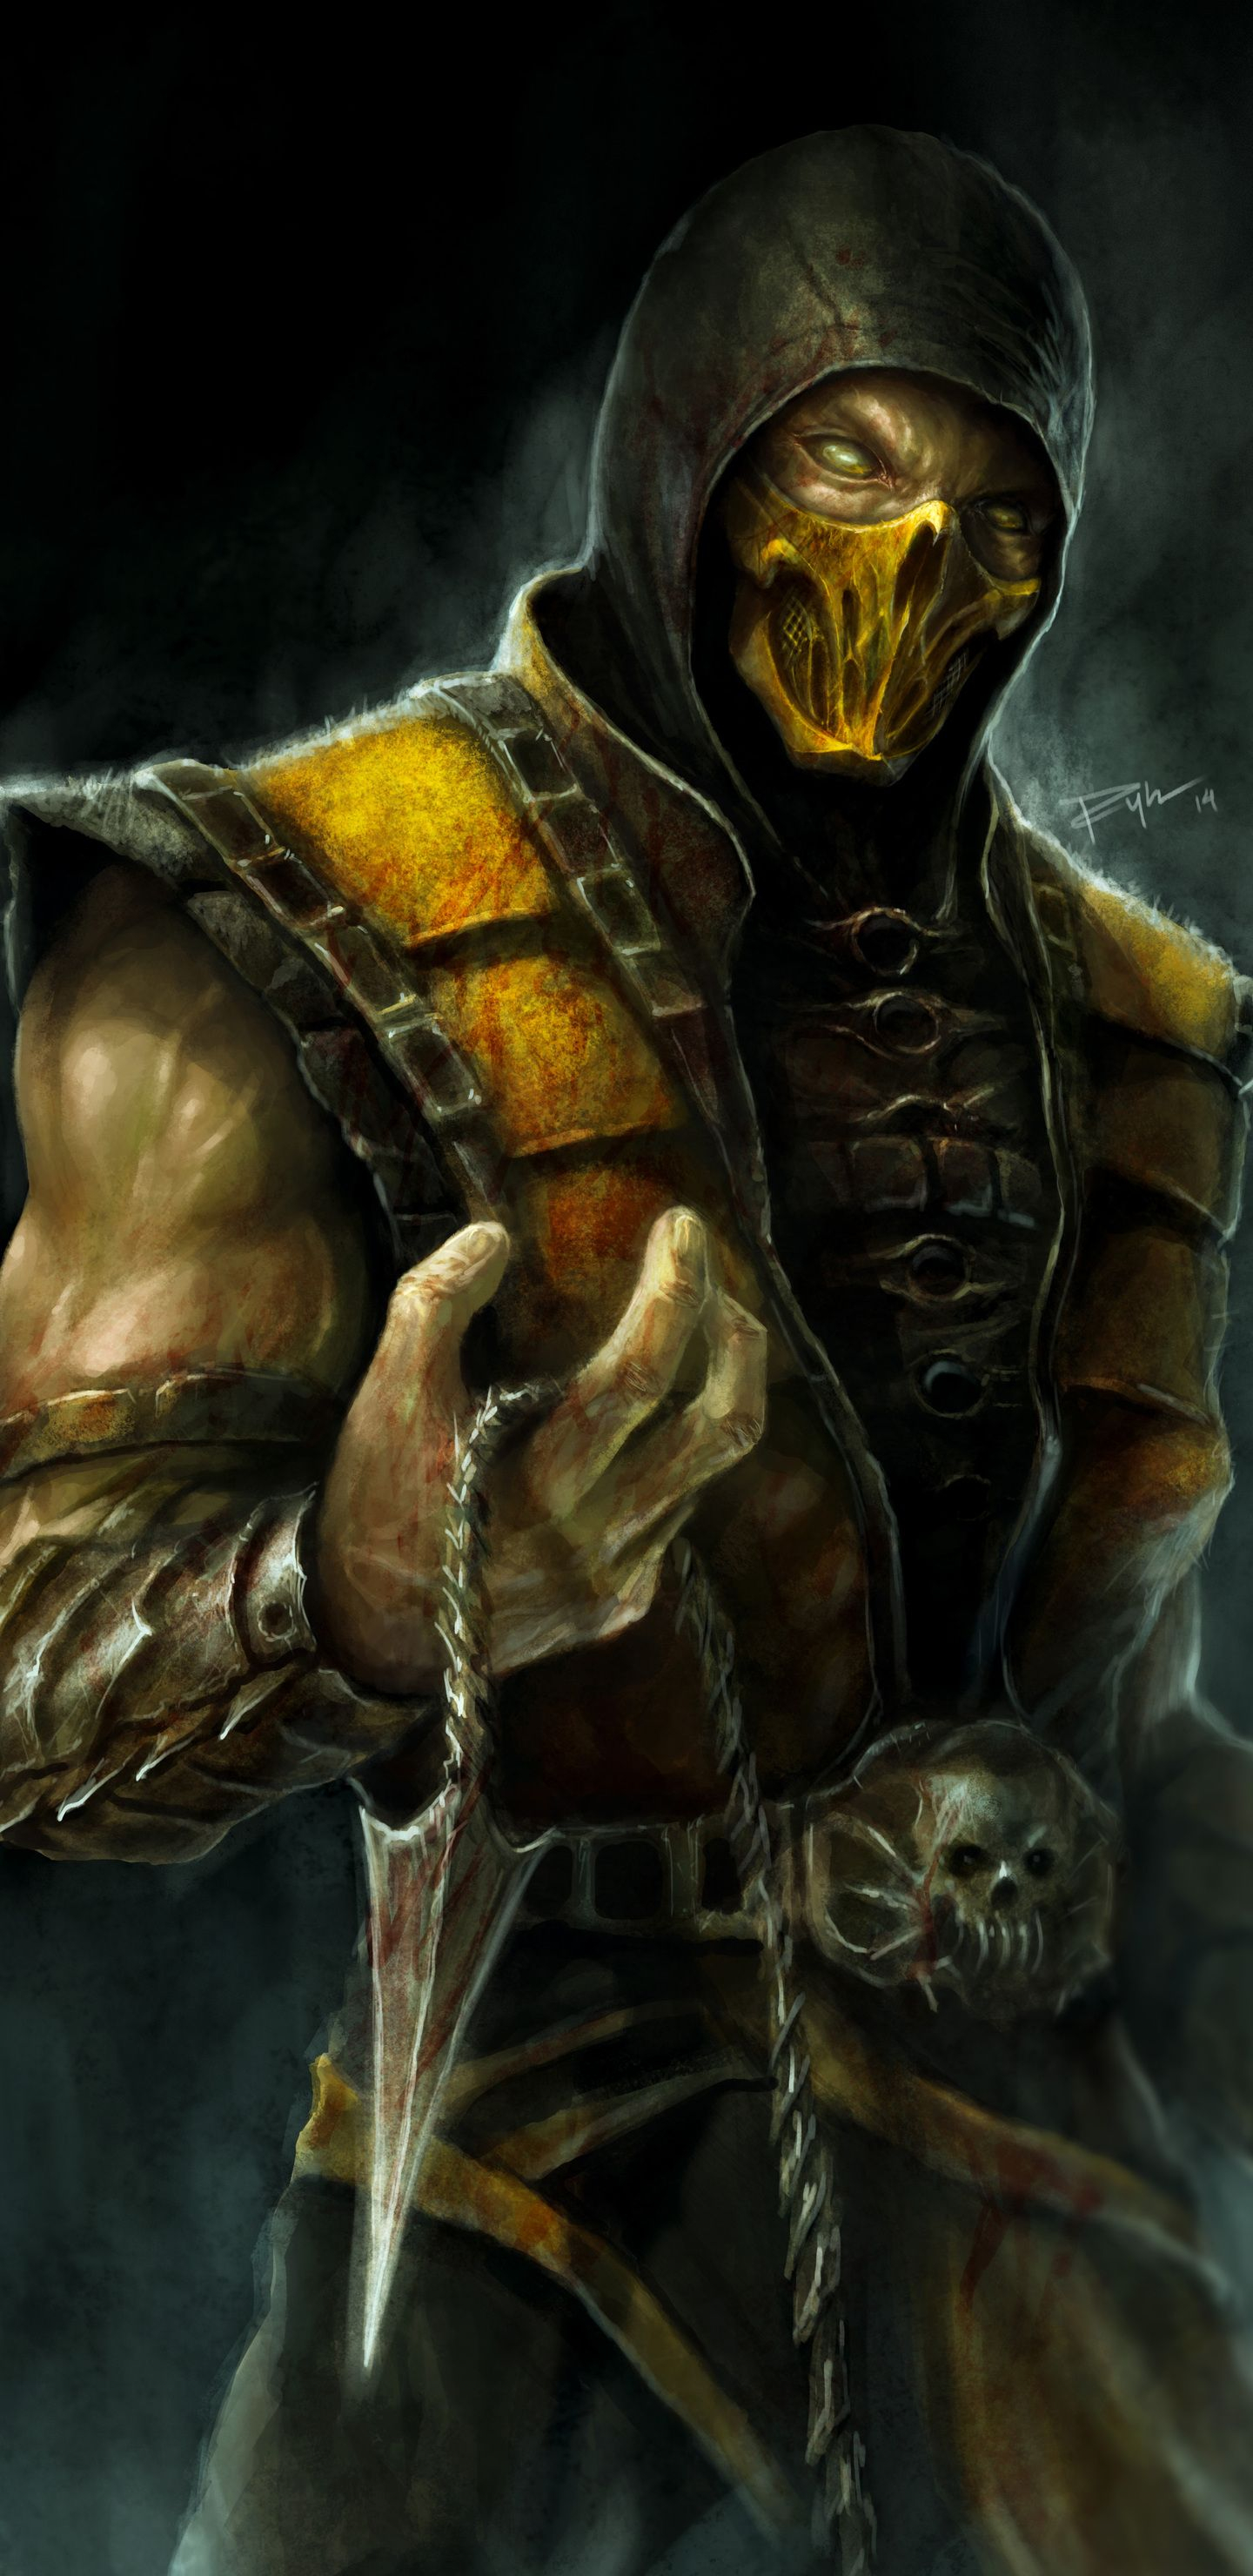 1440x2960 Scorpion Mortal Kombat X 4k Artwork In Resolution | Scorpion mortal kombat, Mortal kombat x, Mortal kombat